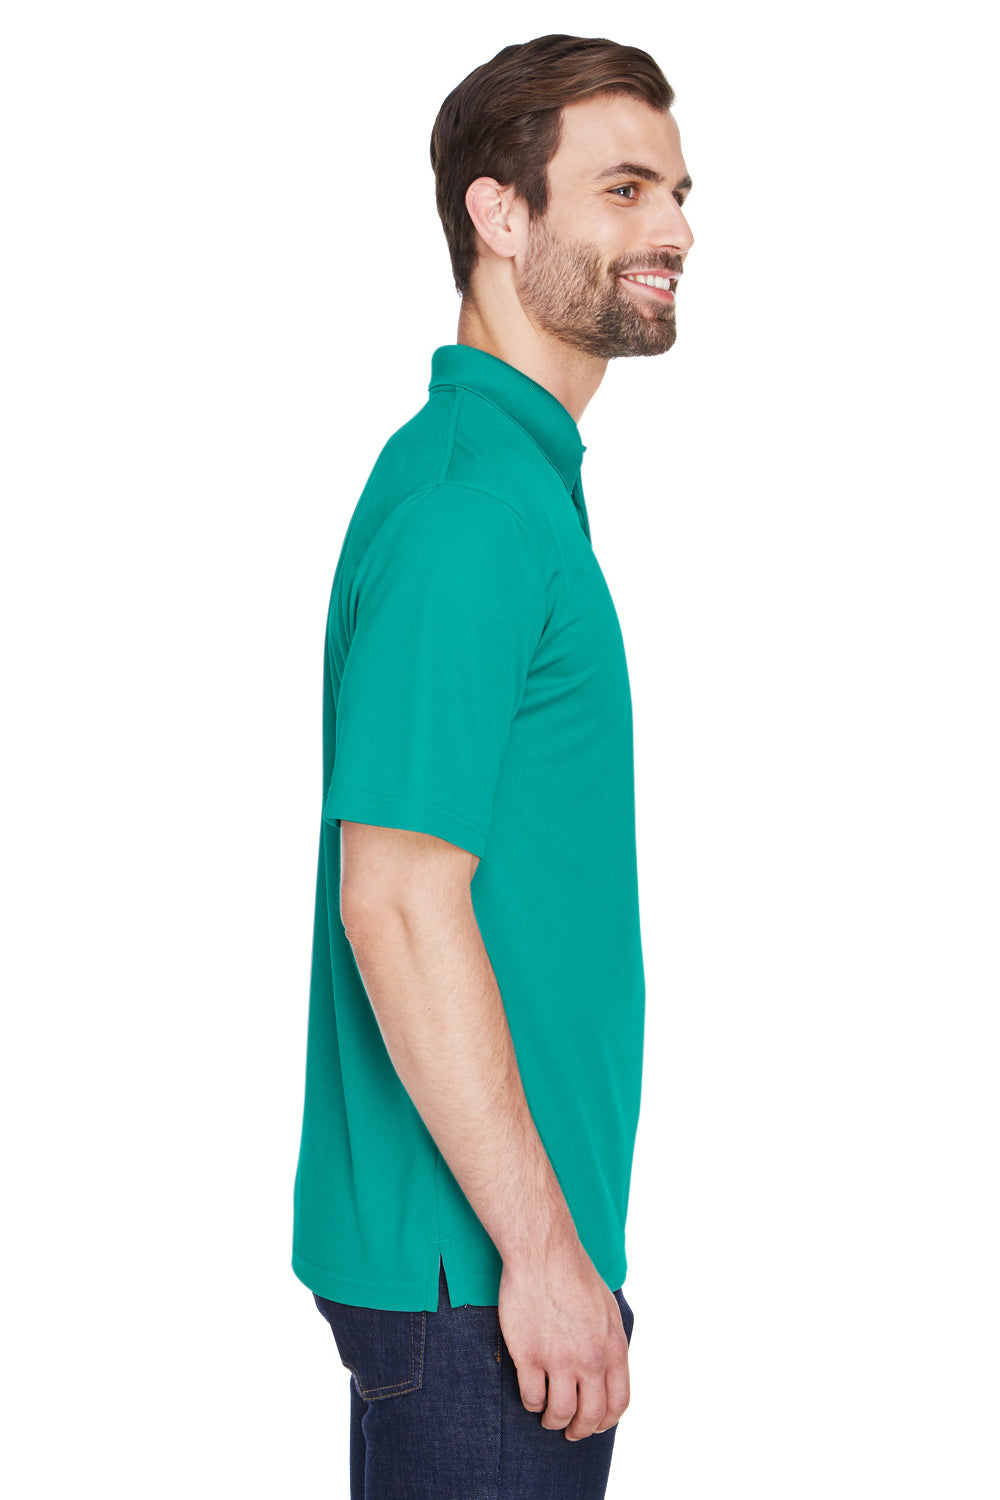 UltraClub 8210 Mens Cool & Dry Moisture Wicking Short Sleeve Polo Shirt Jade Green Side